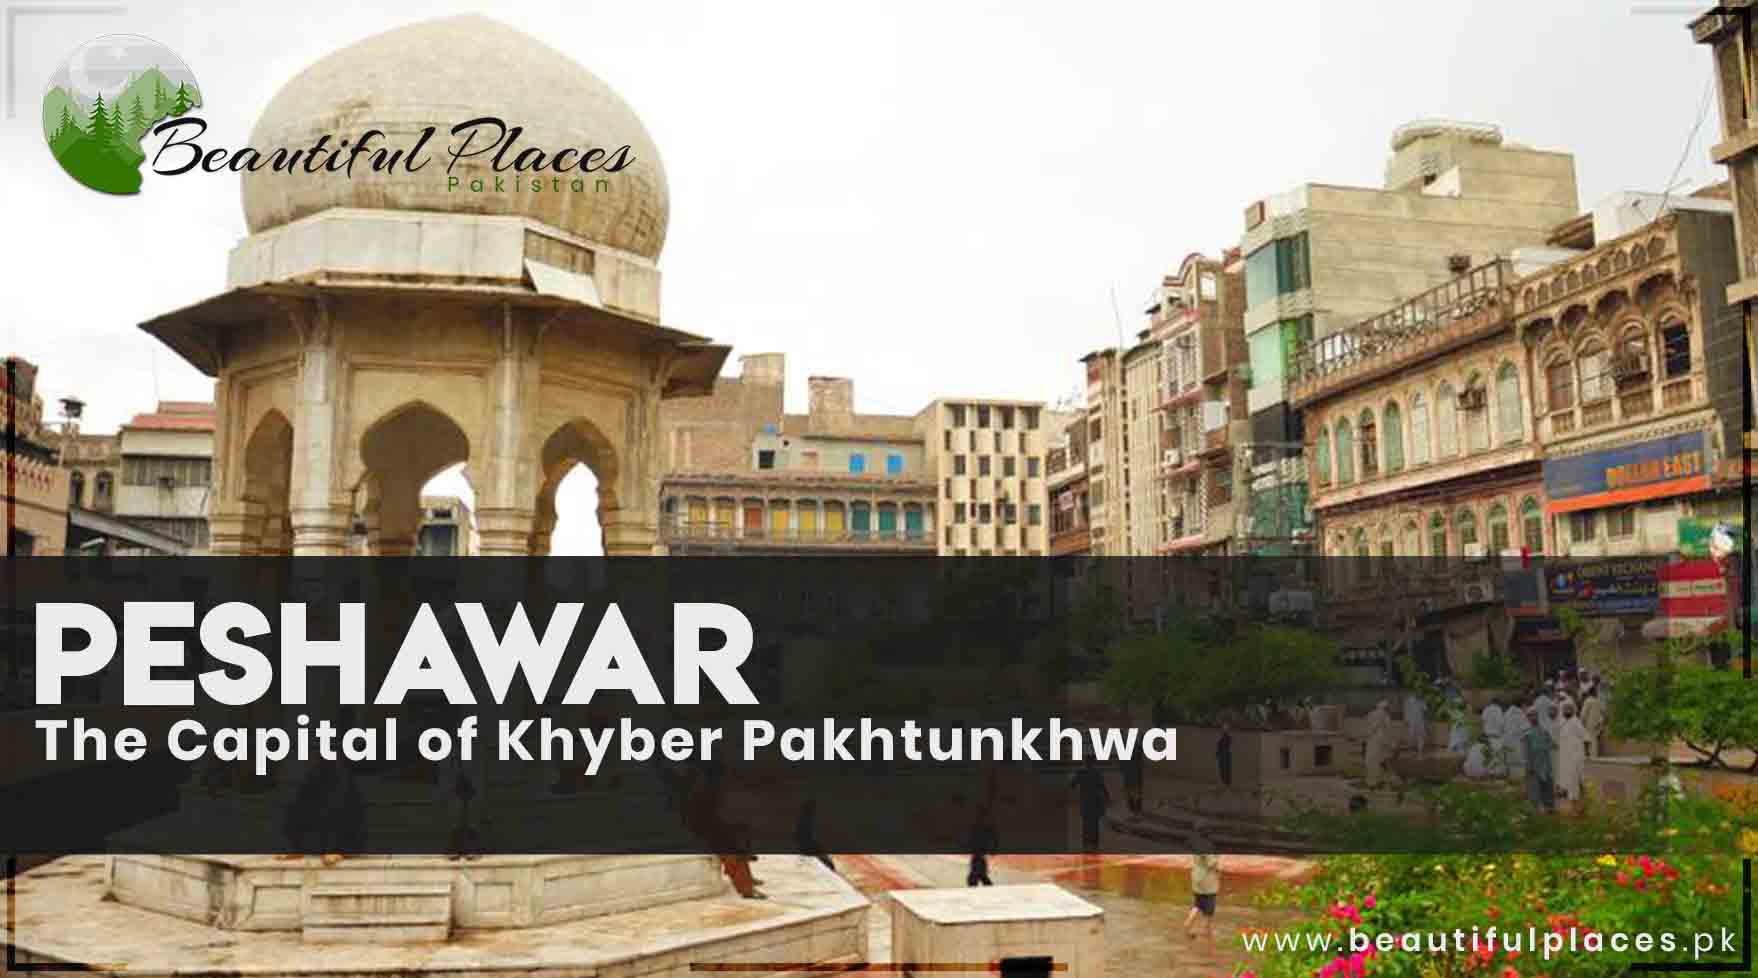 About Peshawar - The Capital of Khyber Pakhtunkhwa